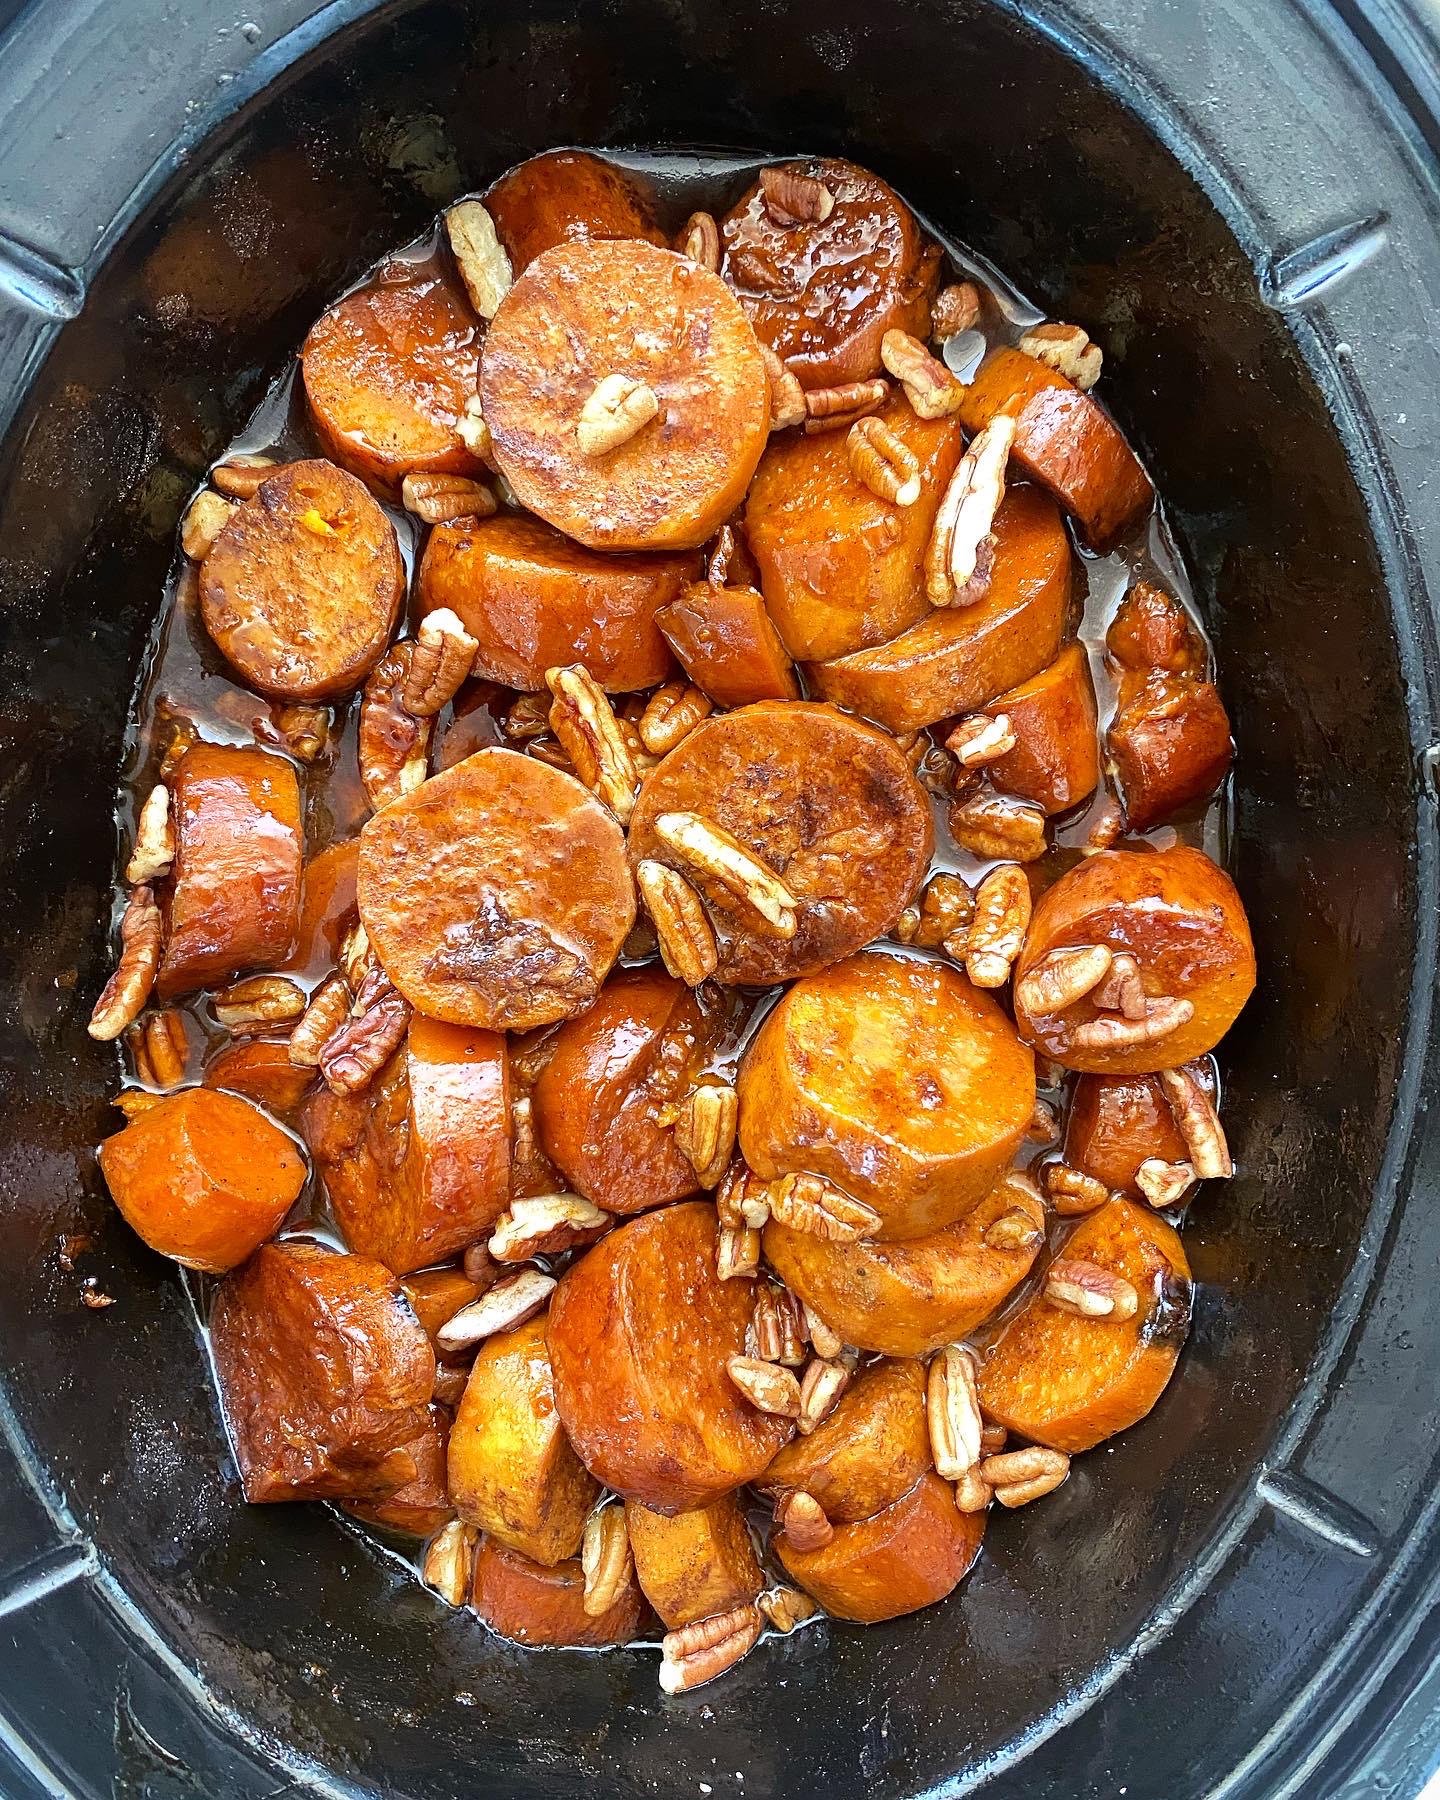 https://blackpeoplesrecipes.com/wp-content/uploads/2022/08/slow-cooker-sweet-potatoes-5.jpg